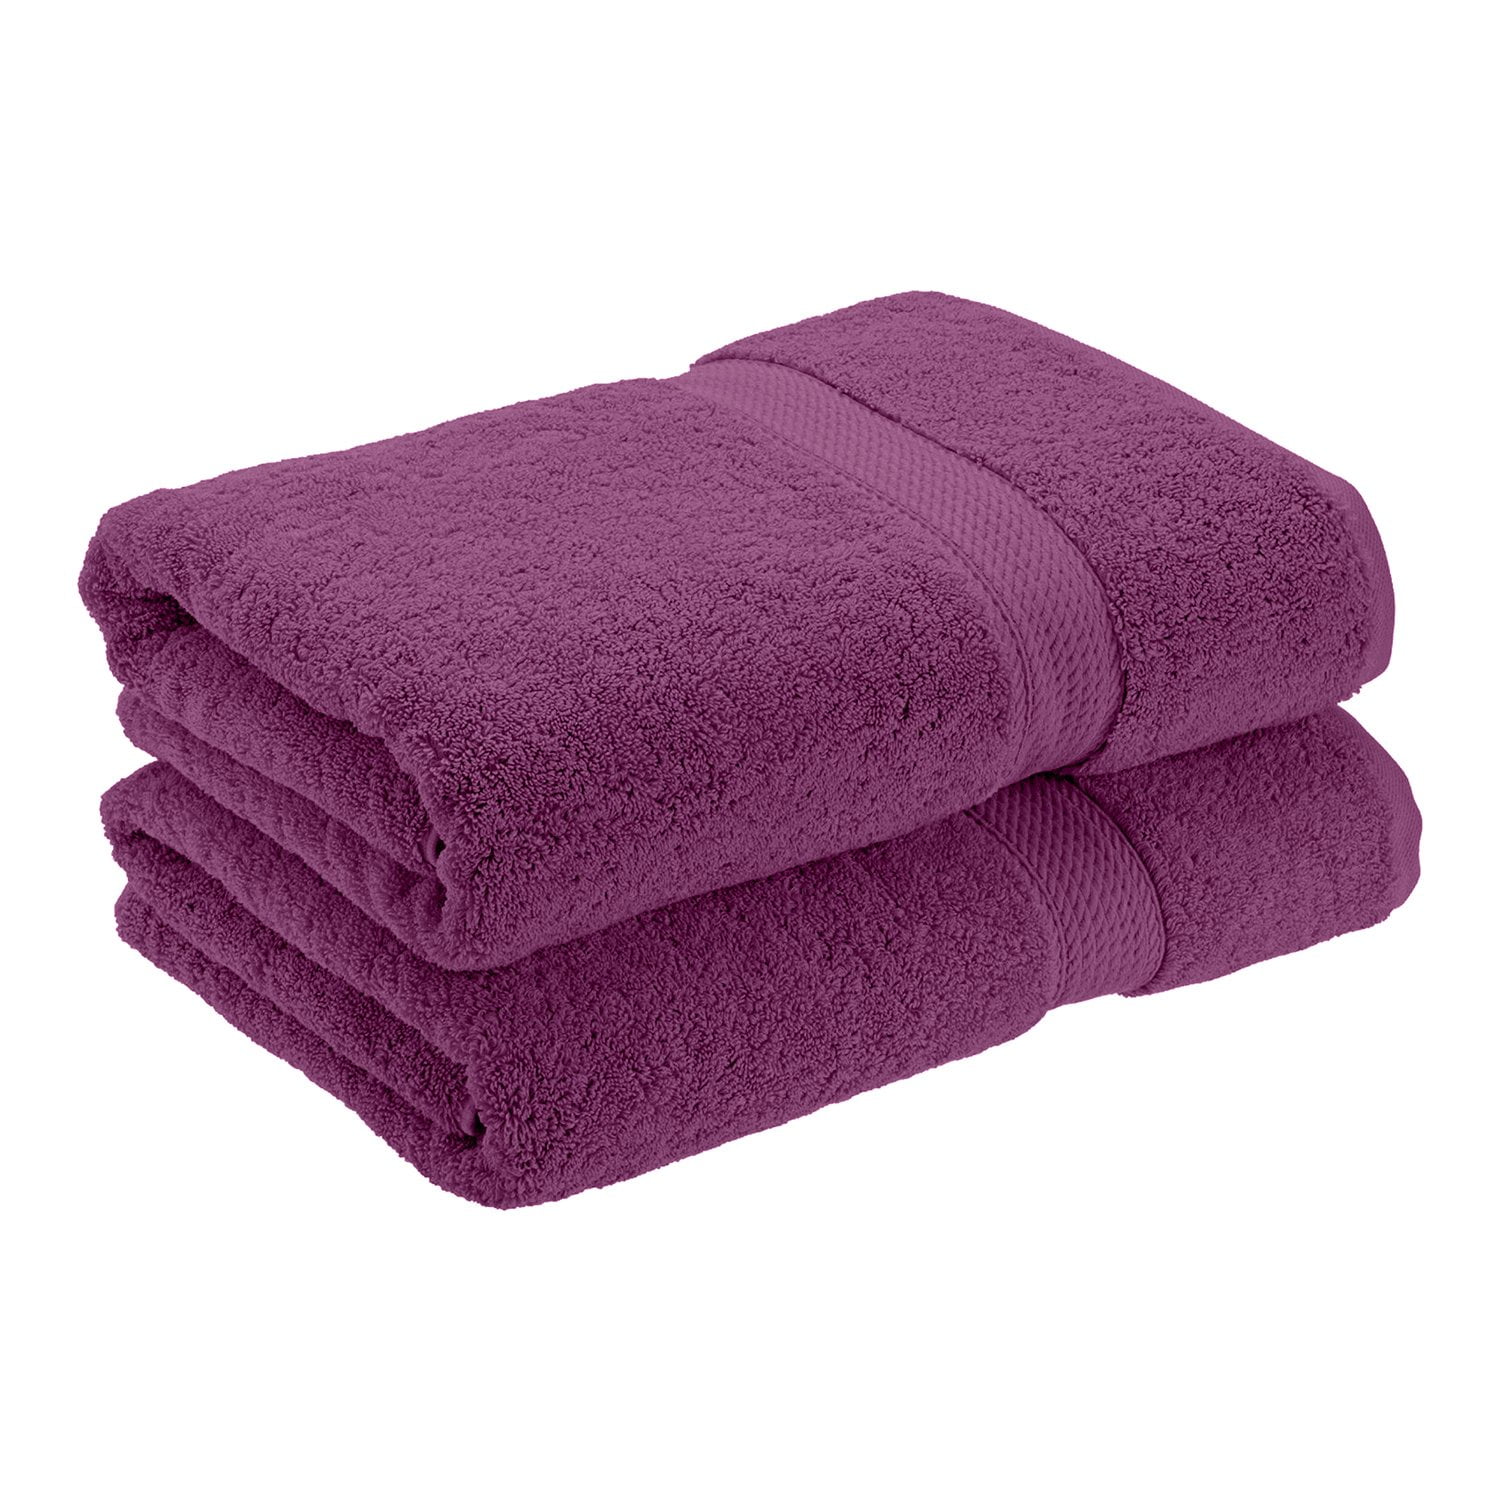 Egyptian Cotton 900 GSM Hotel Quality 2-Piece Bath Towel Set Plum 